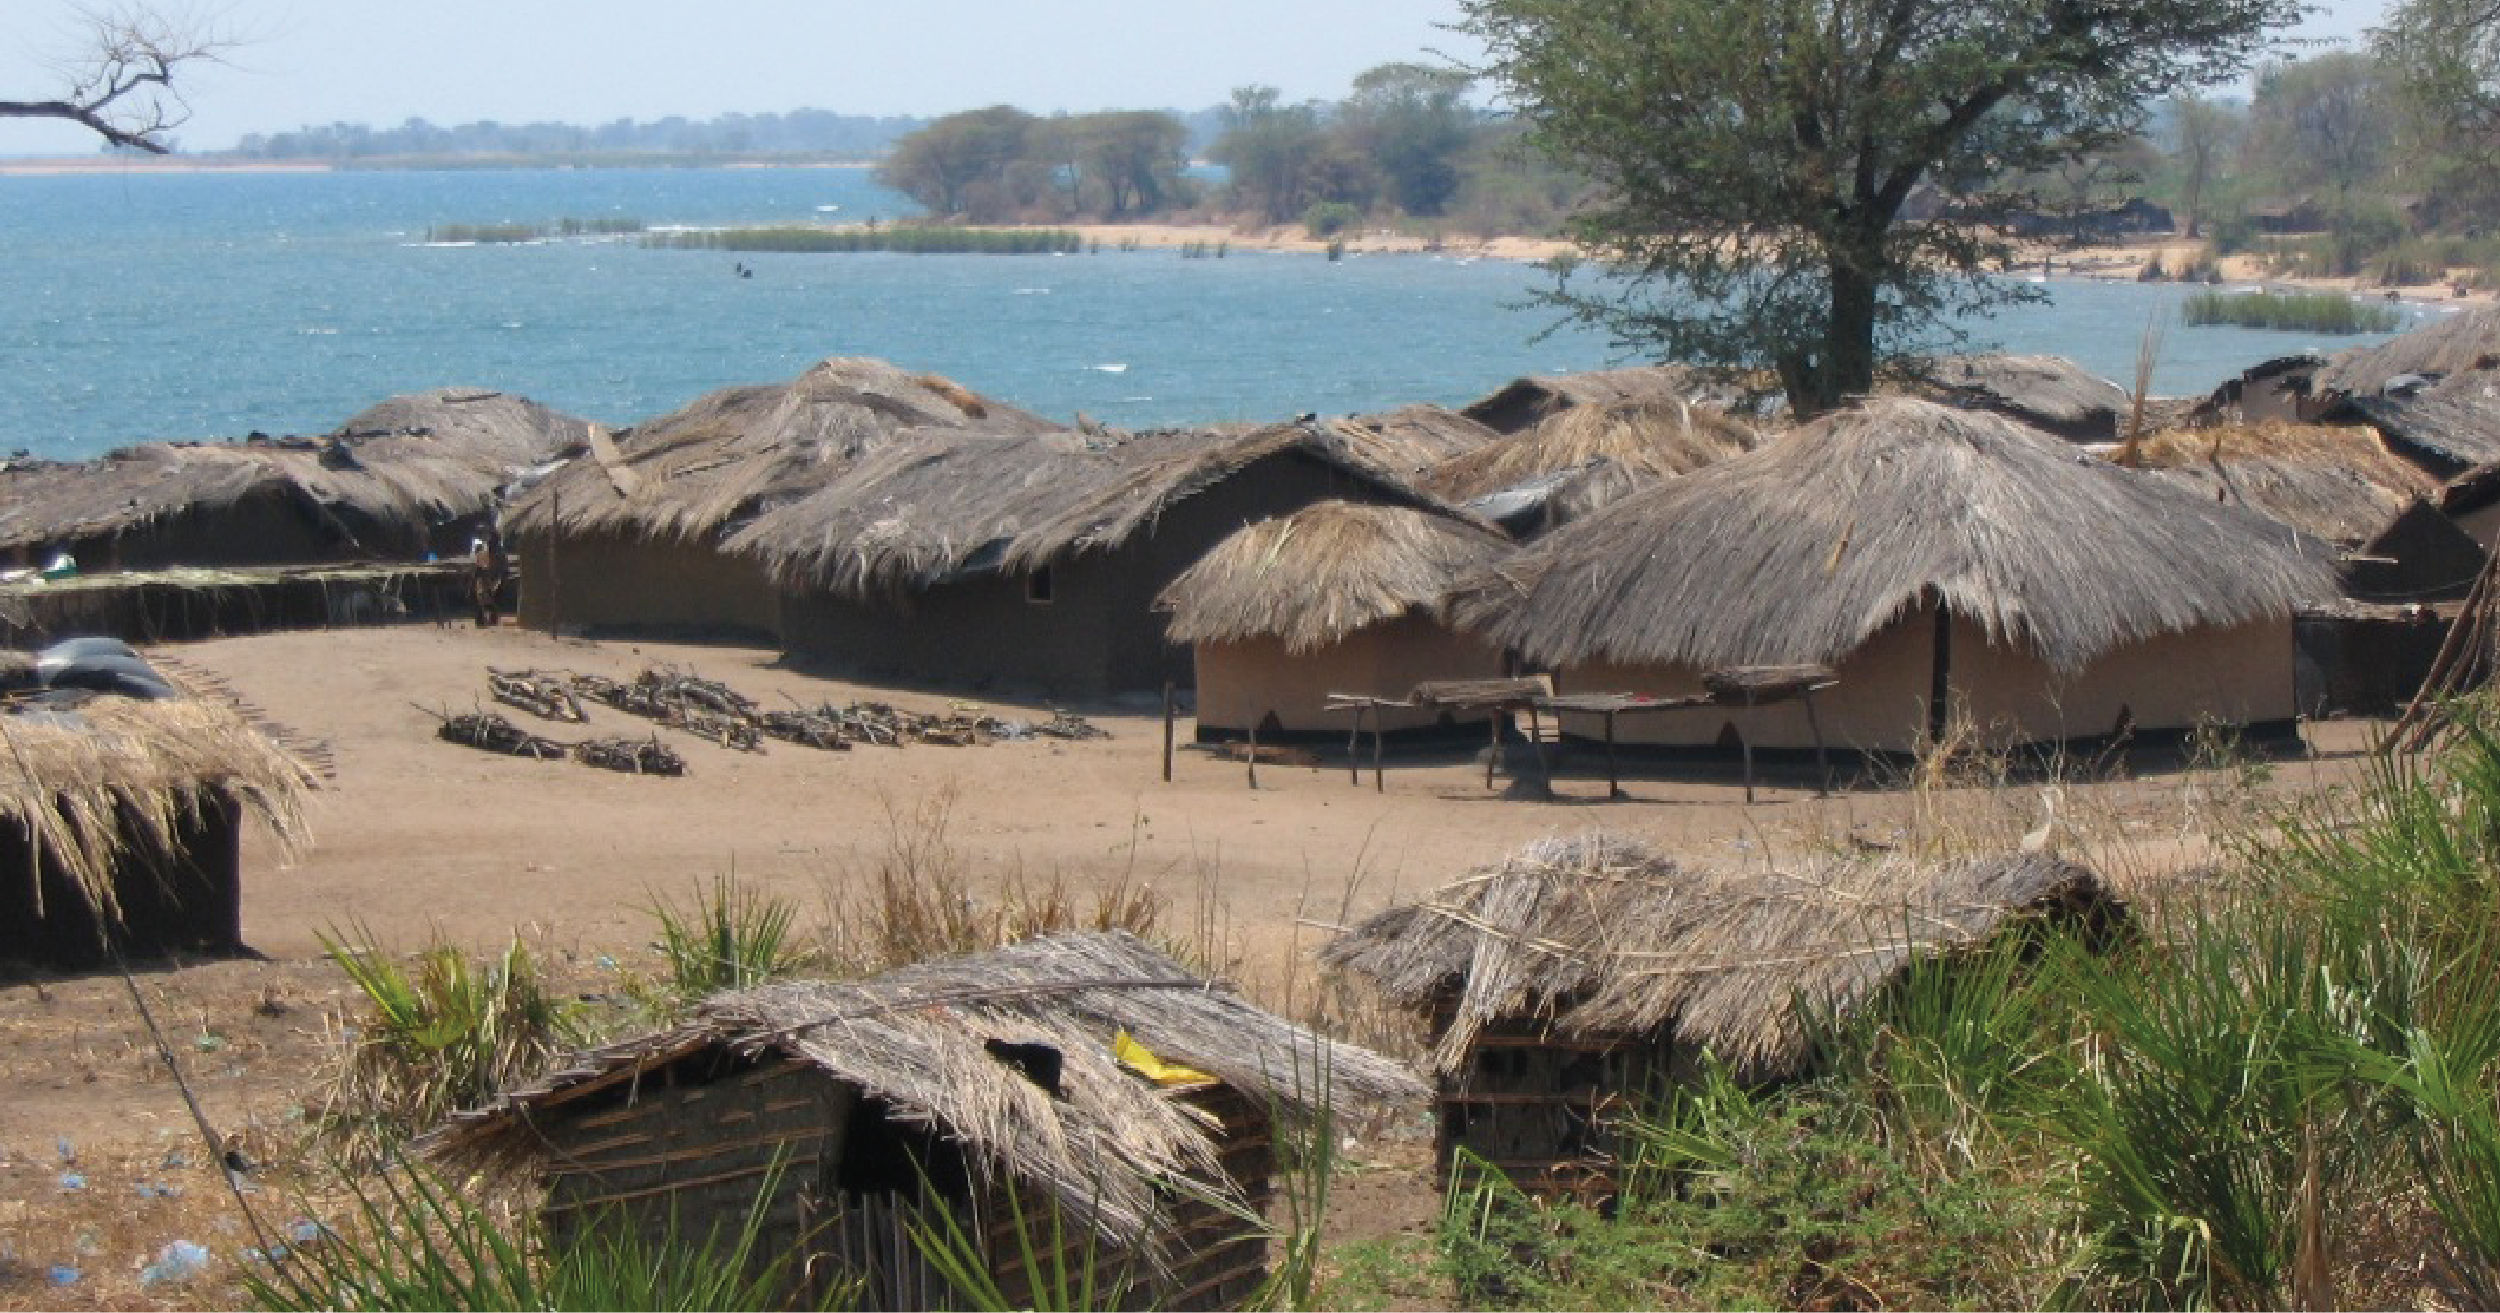 Malawi Lake Village